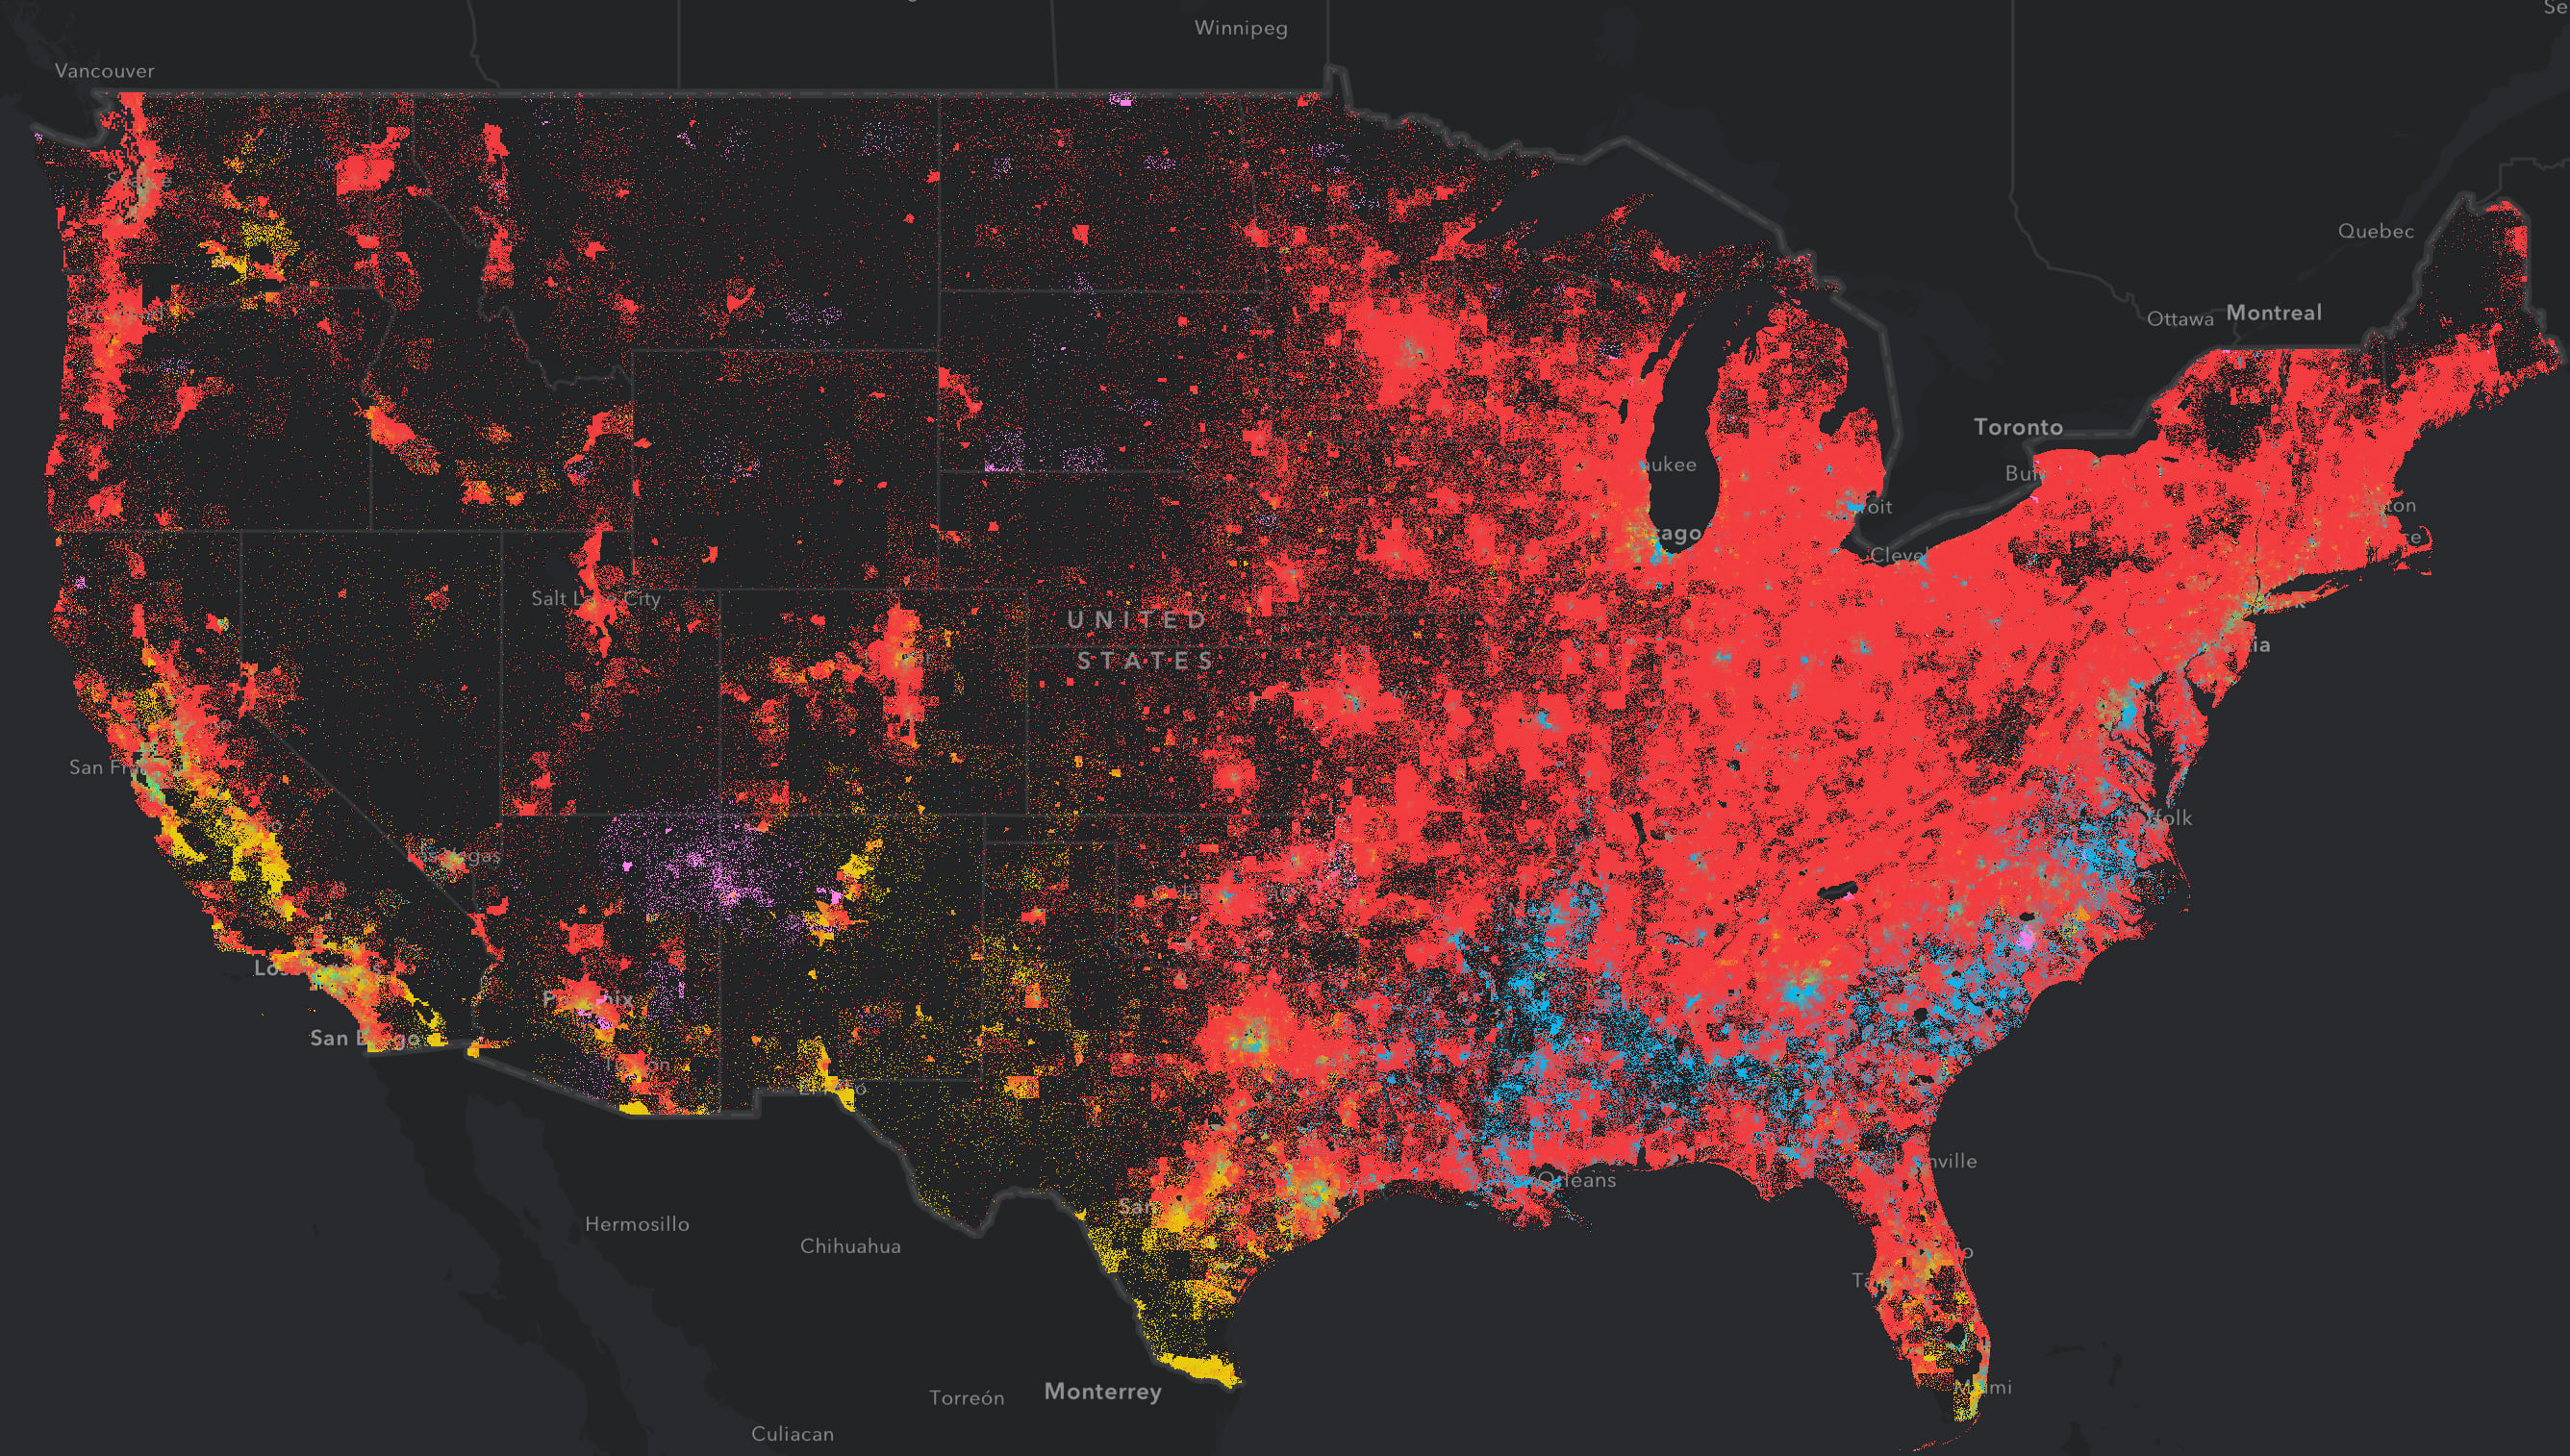 map of population density of us